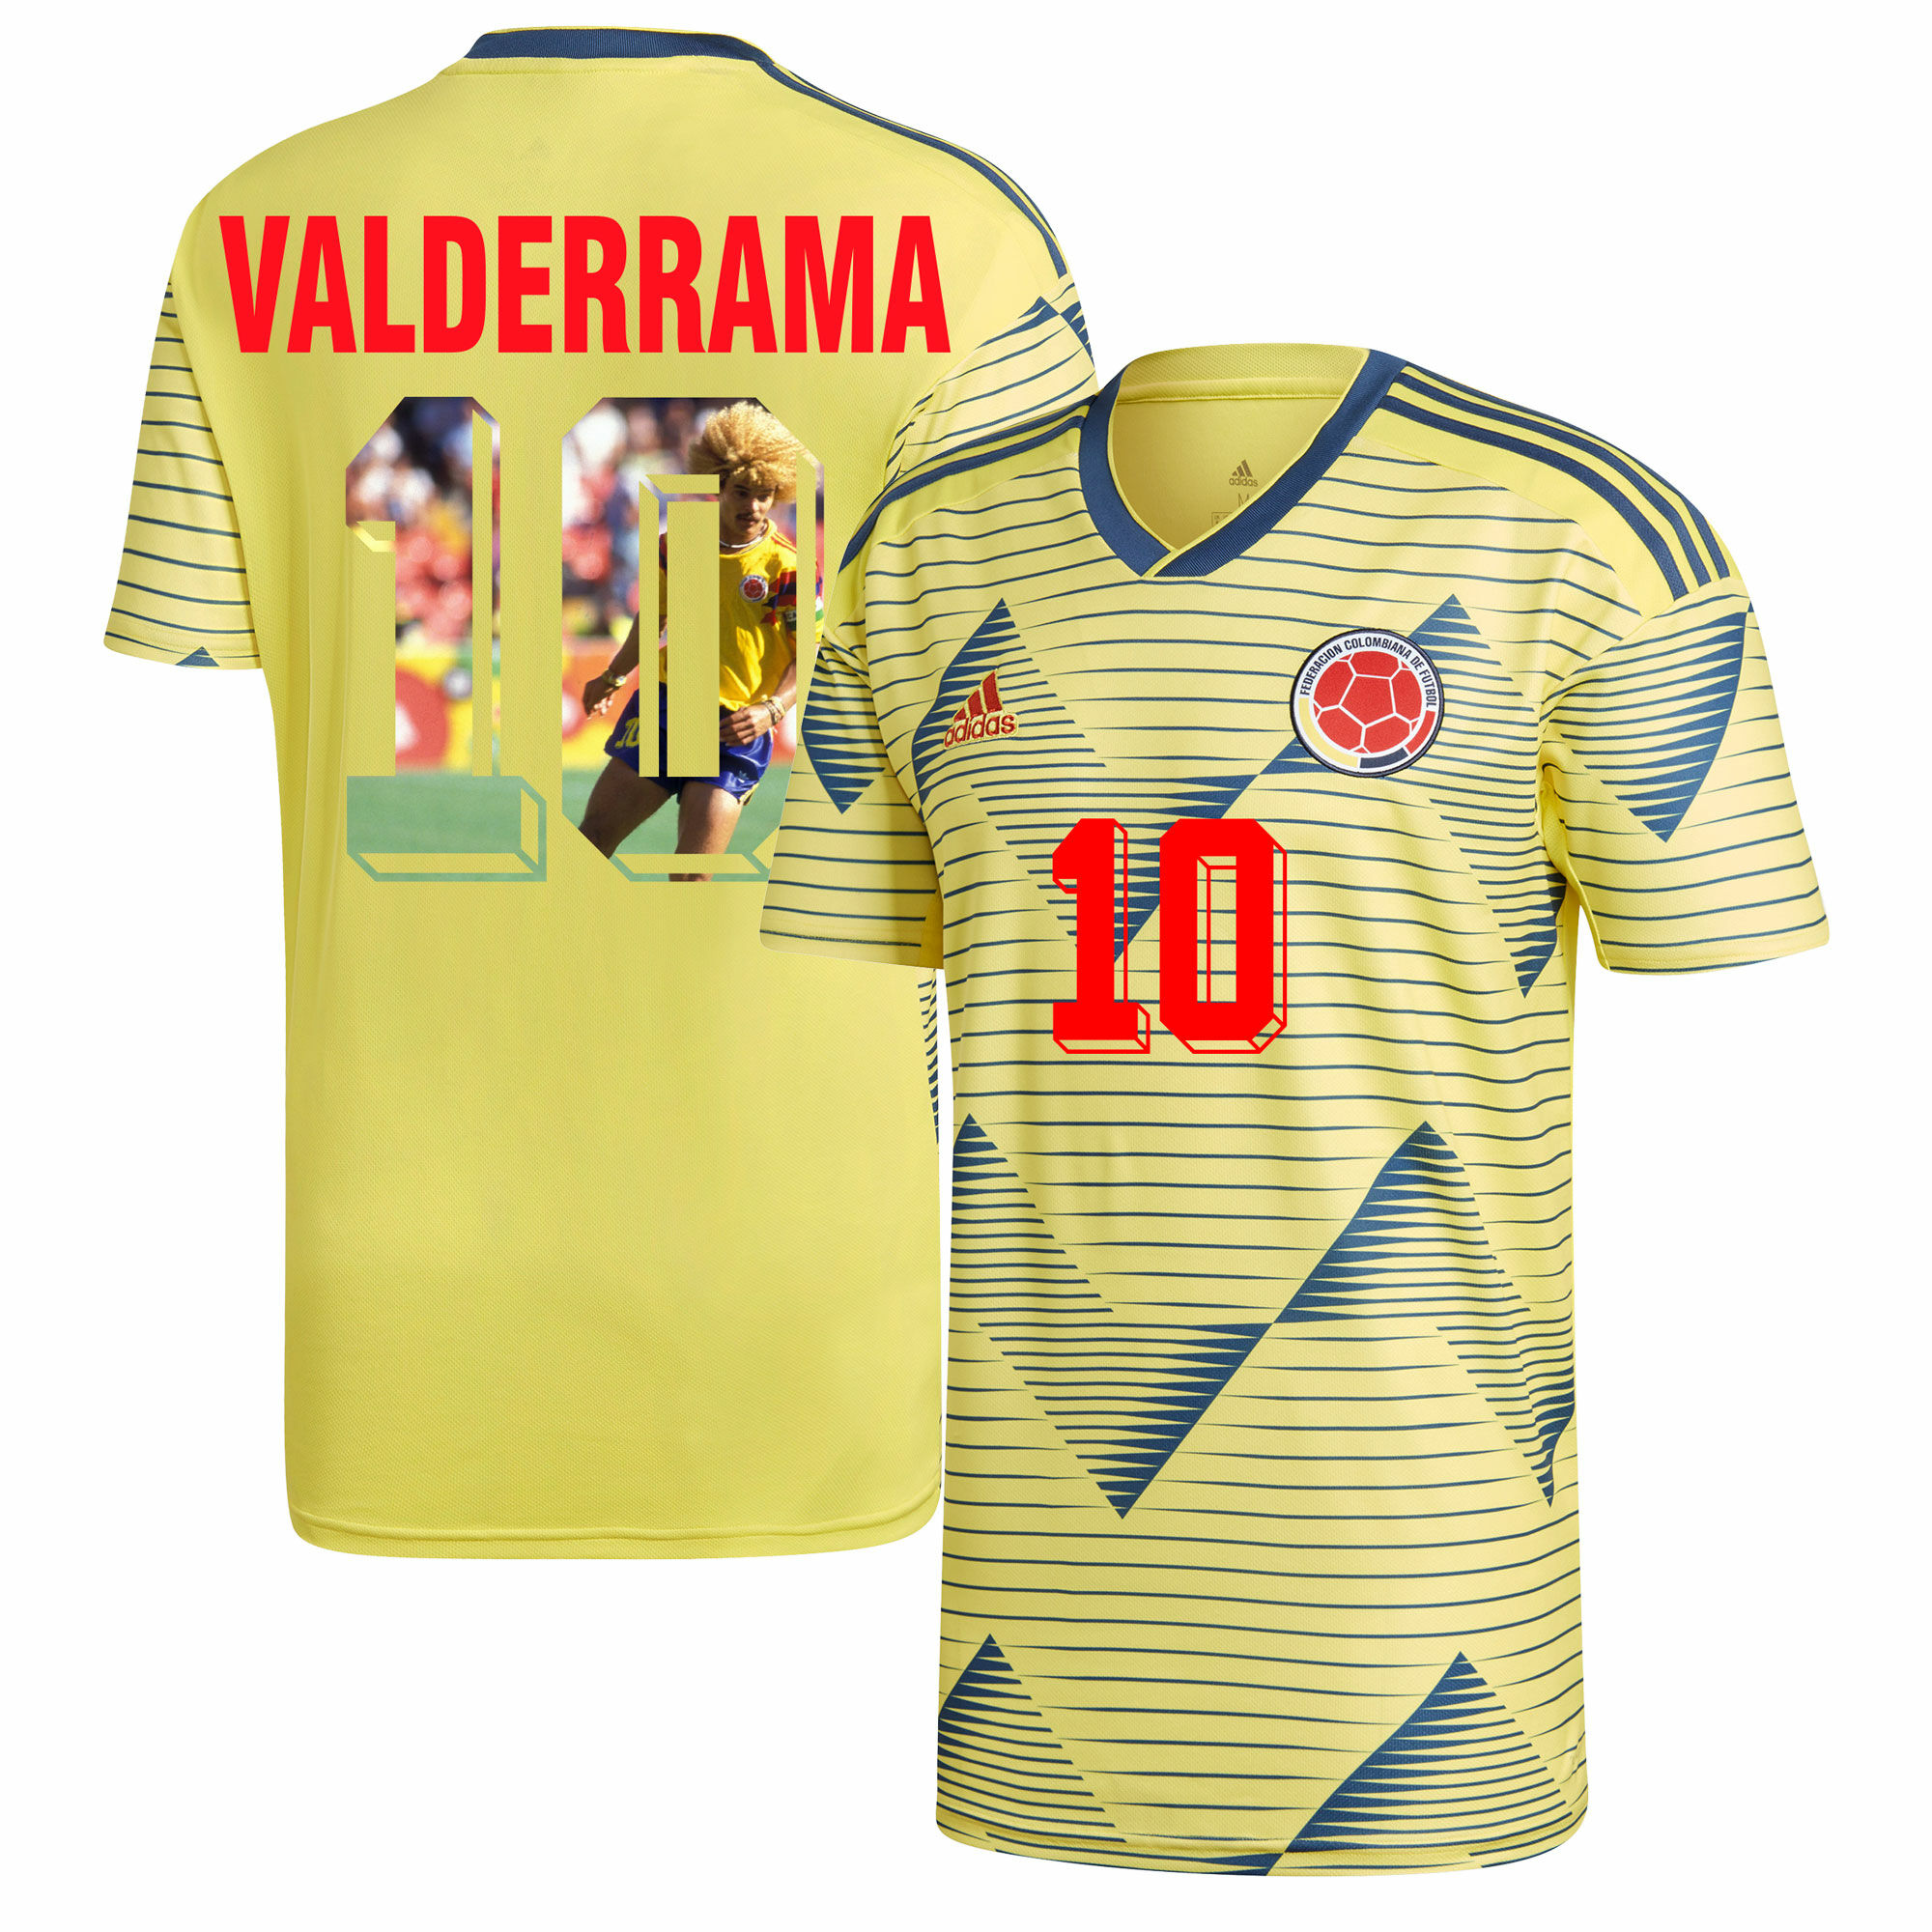 Kolumbie - Dres fotbalový - 2019, žlutý, domácí